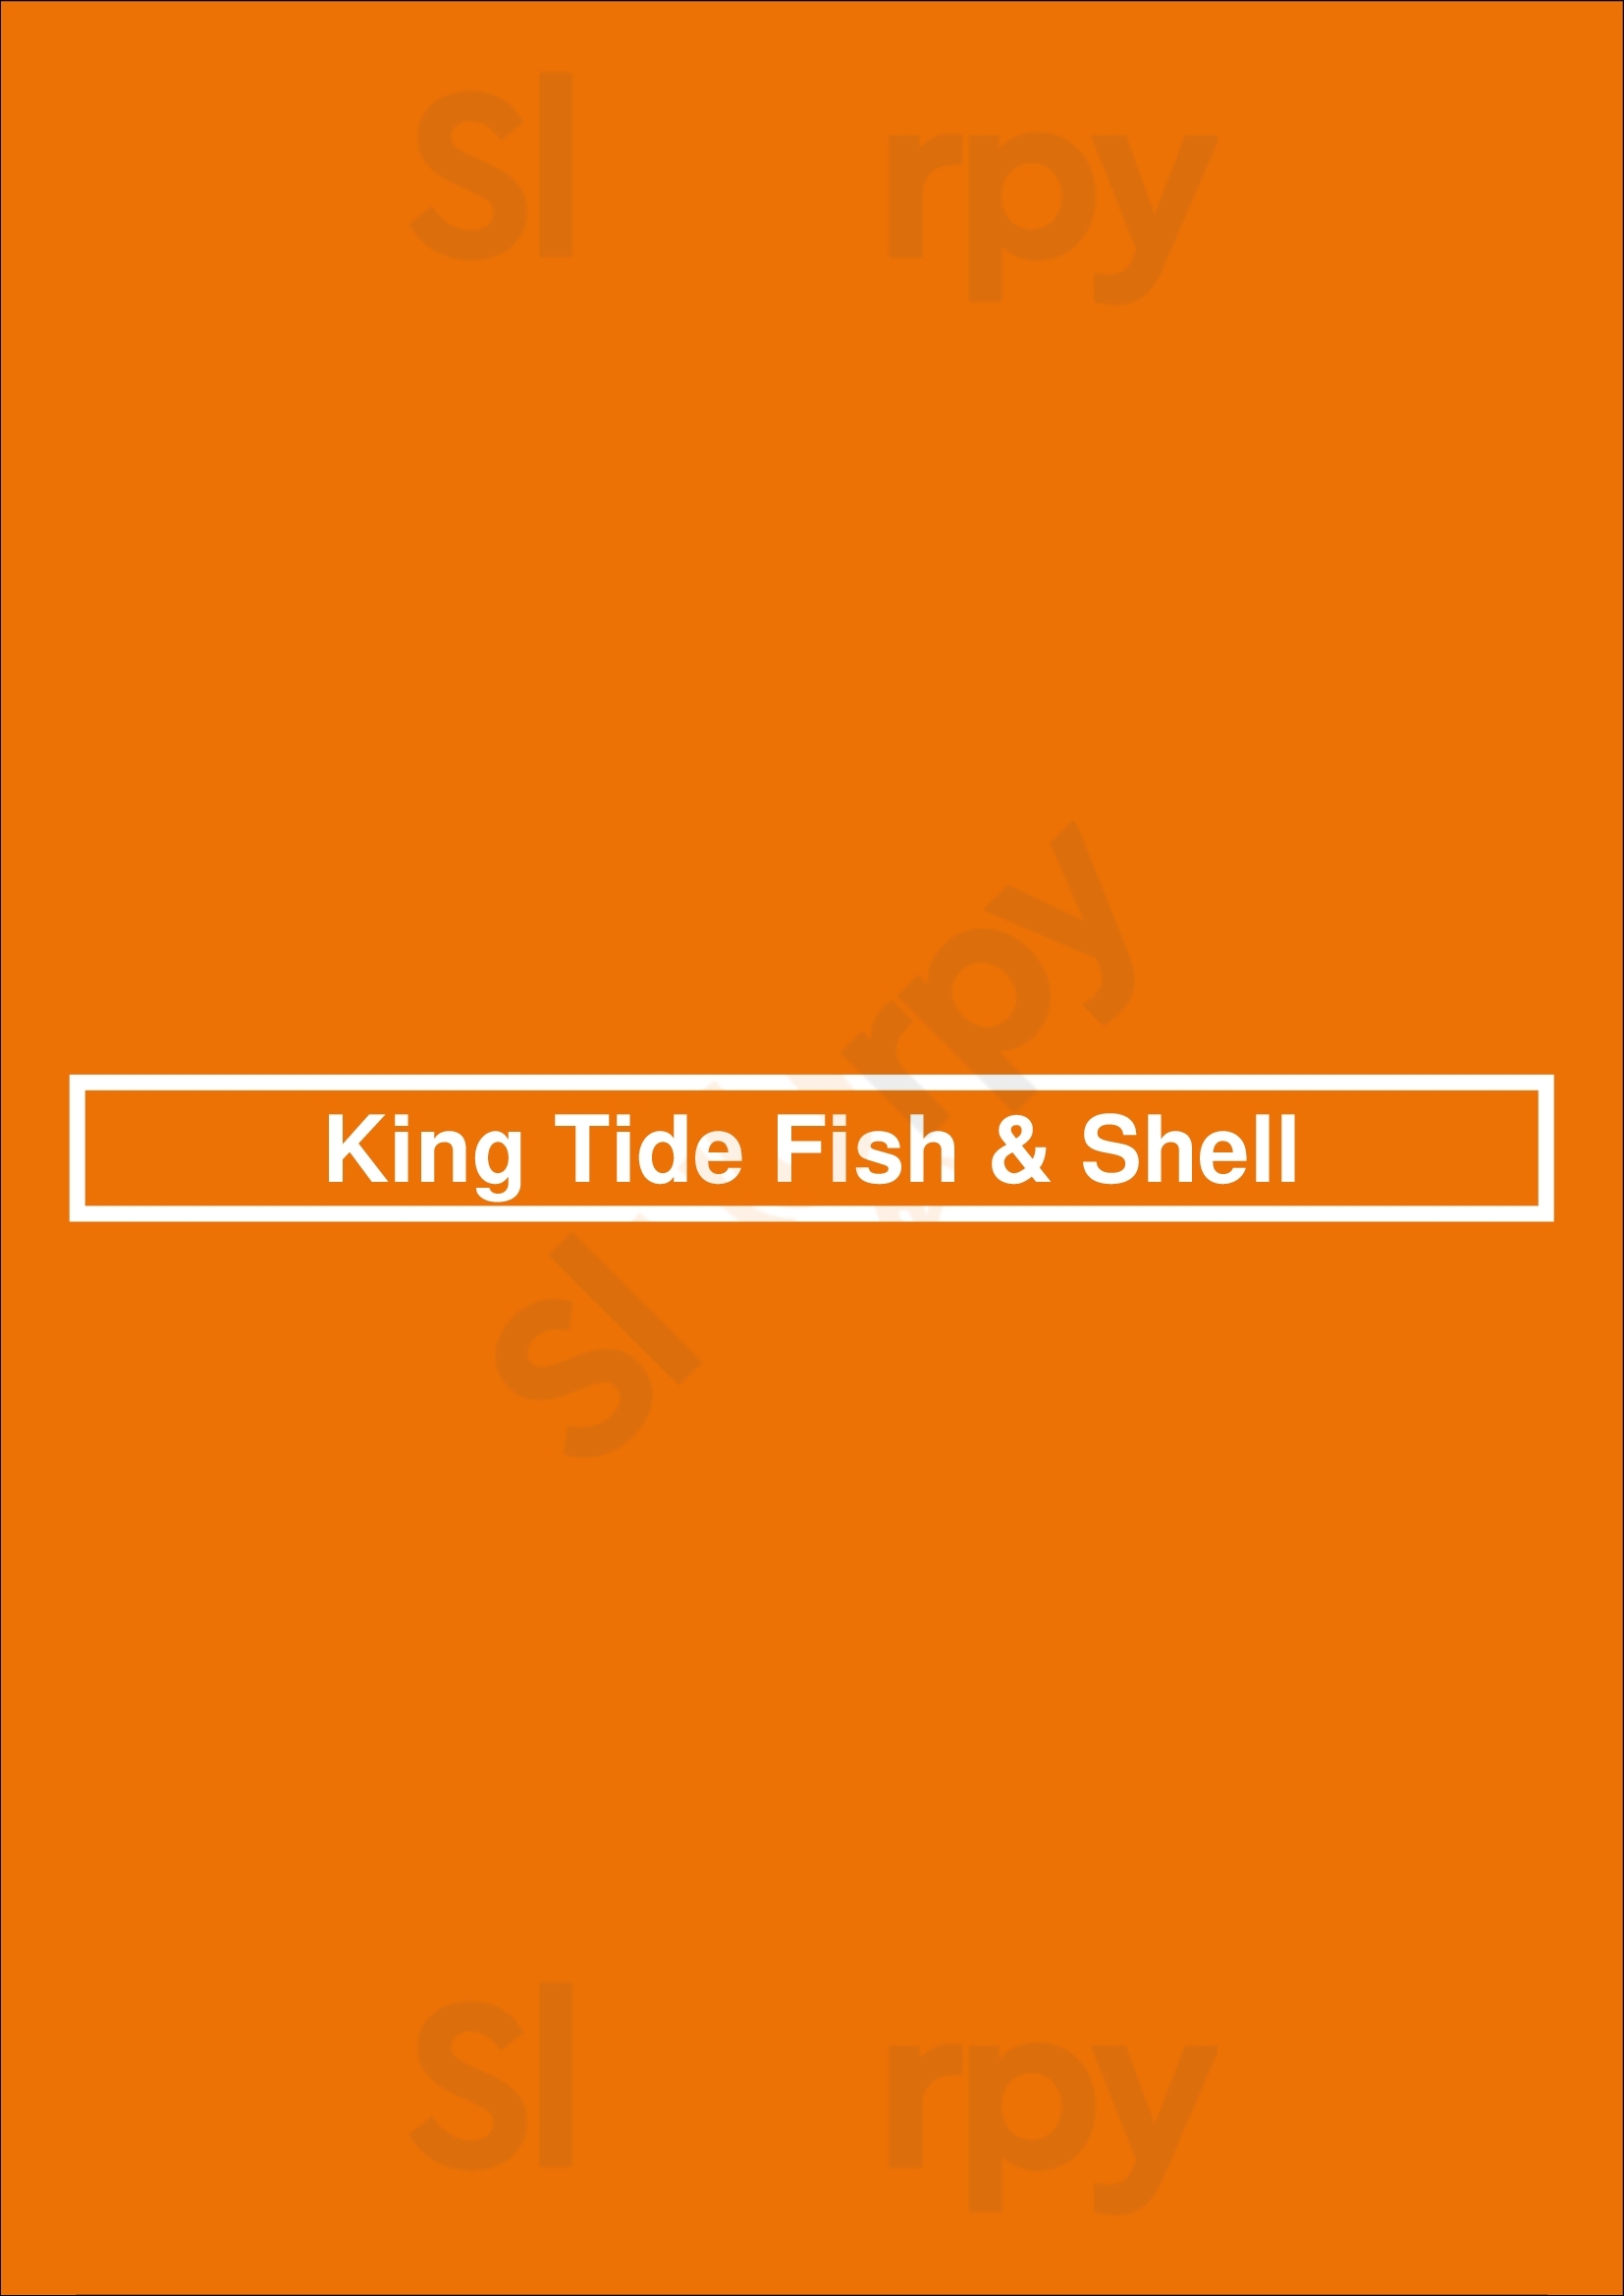 King Tide Fish & Shell Portland Menu - 1